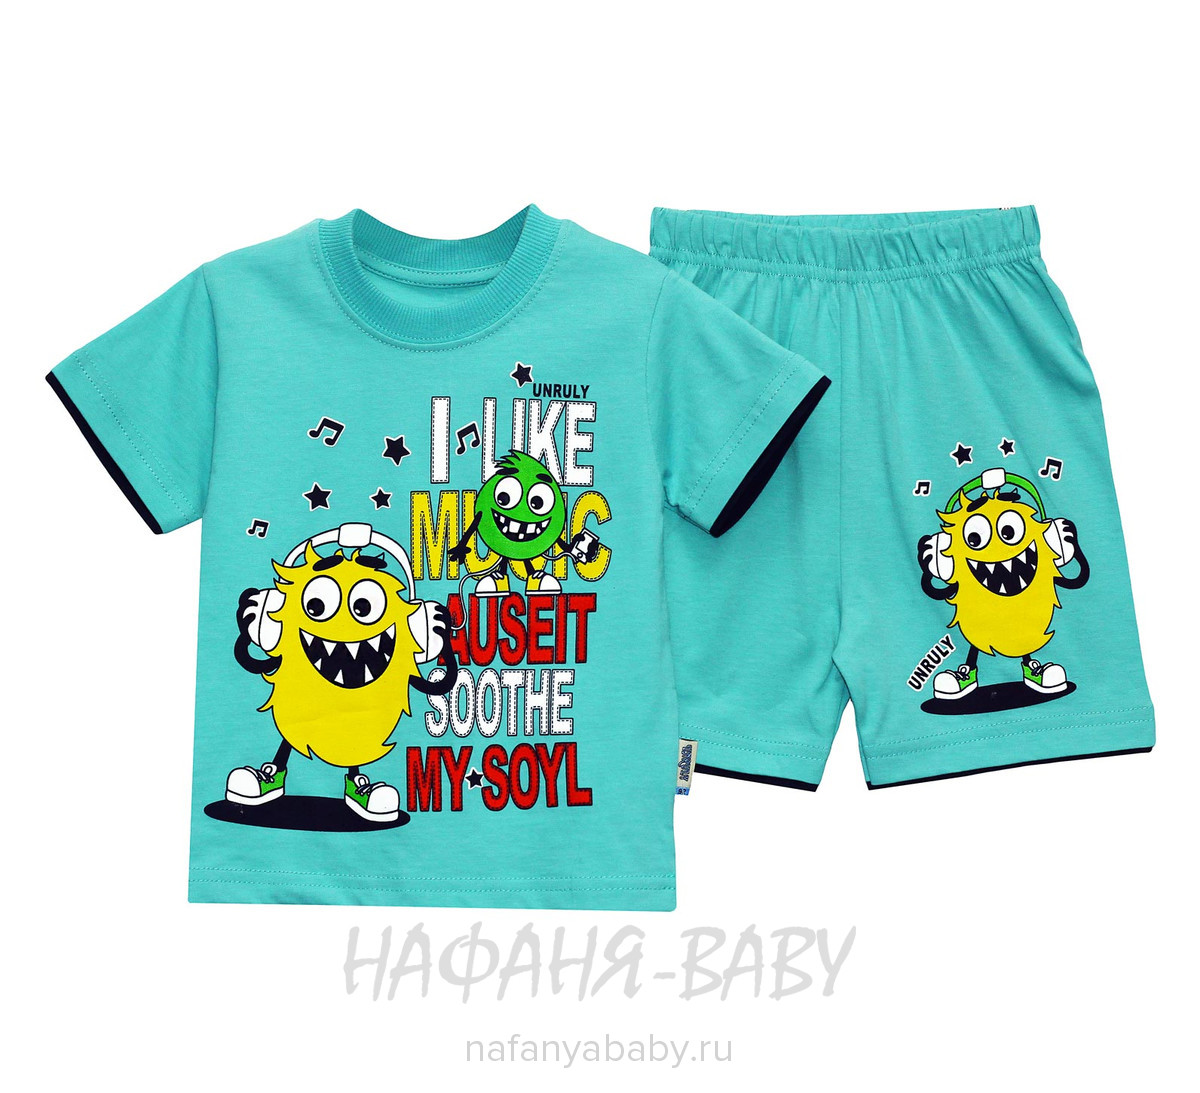 Детский костюм (футболка+шорты) UNRULY арт: 3056, 1-4 года, 5-9 лет, оптом Турция